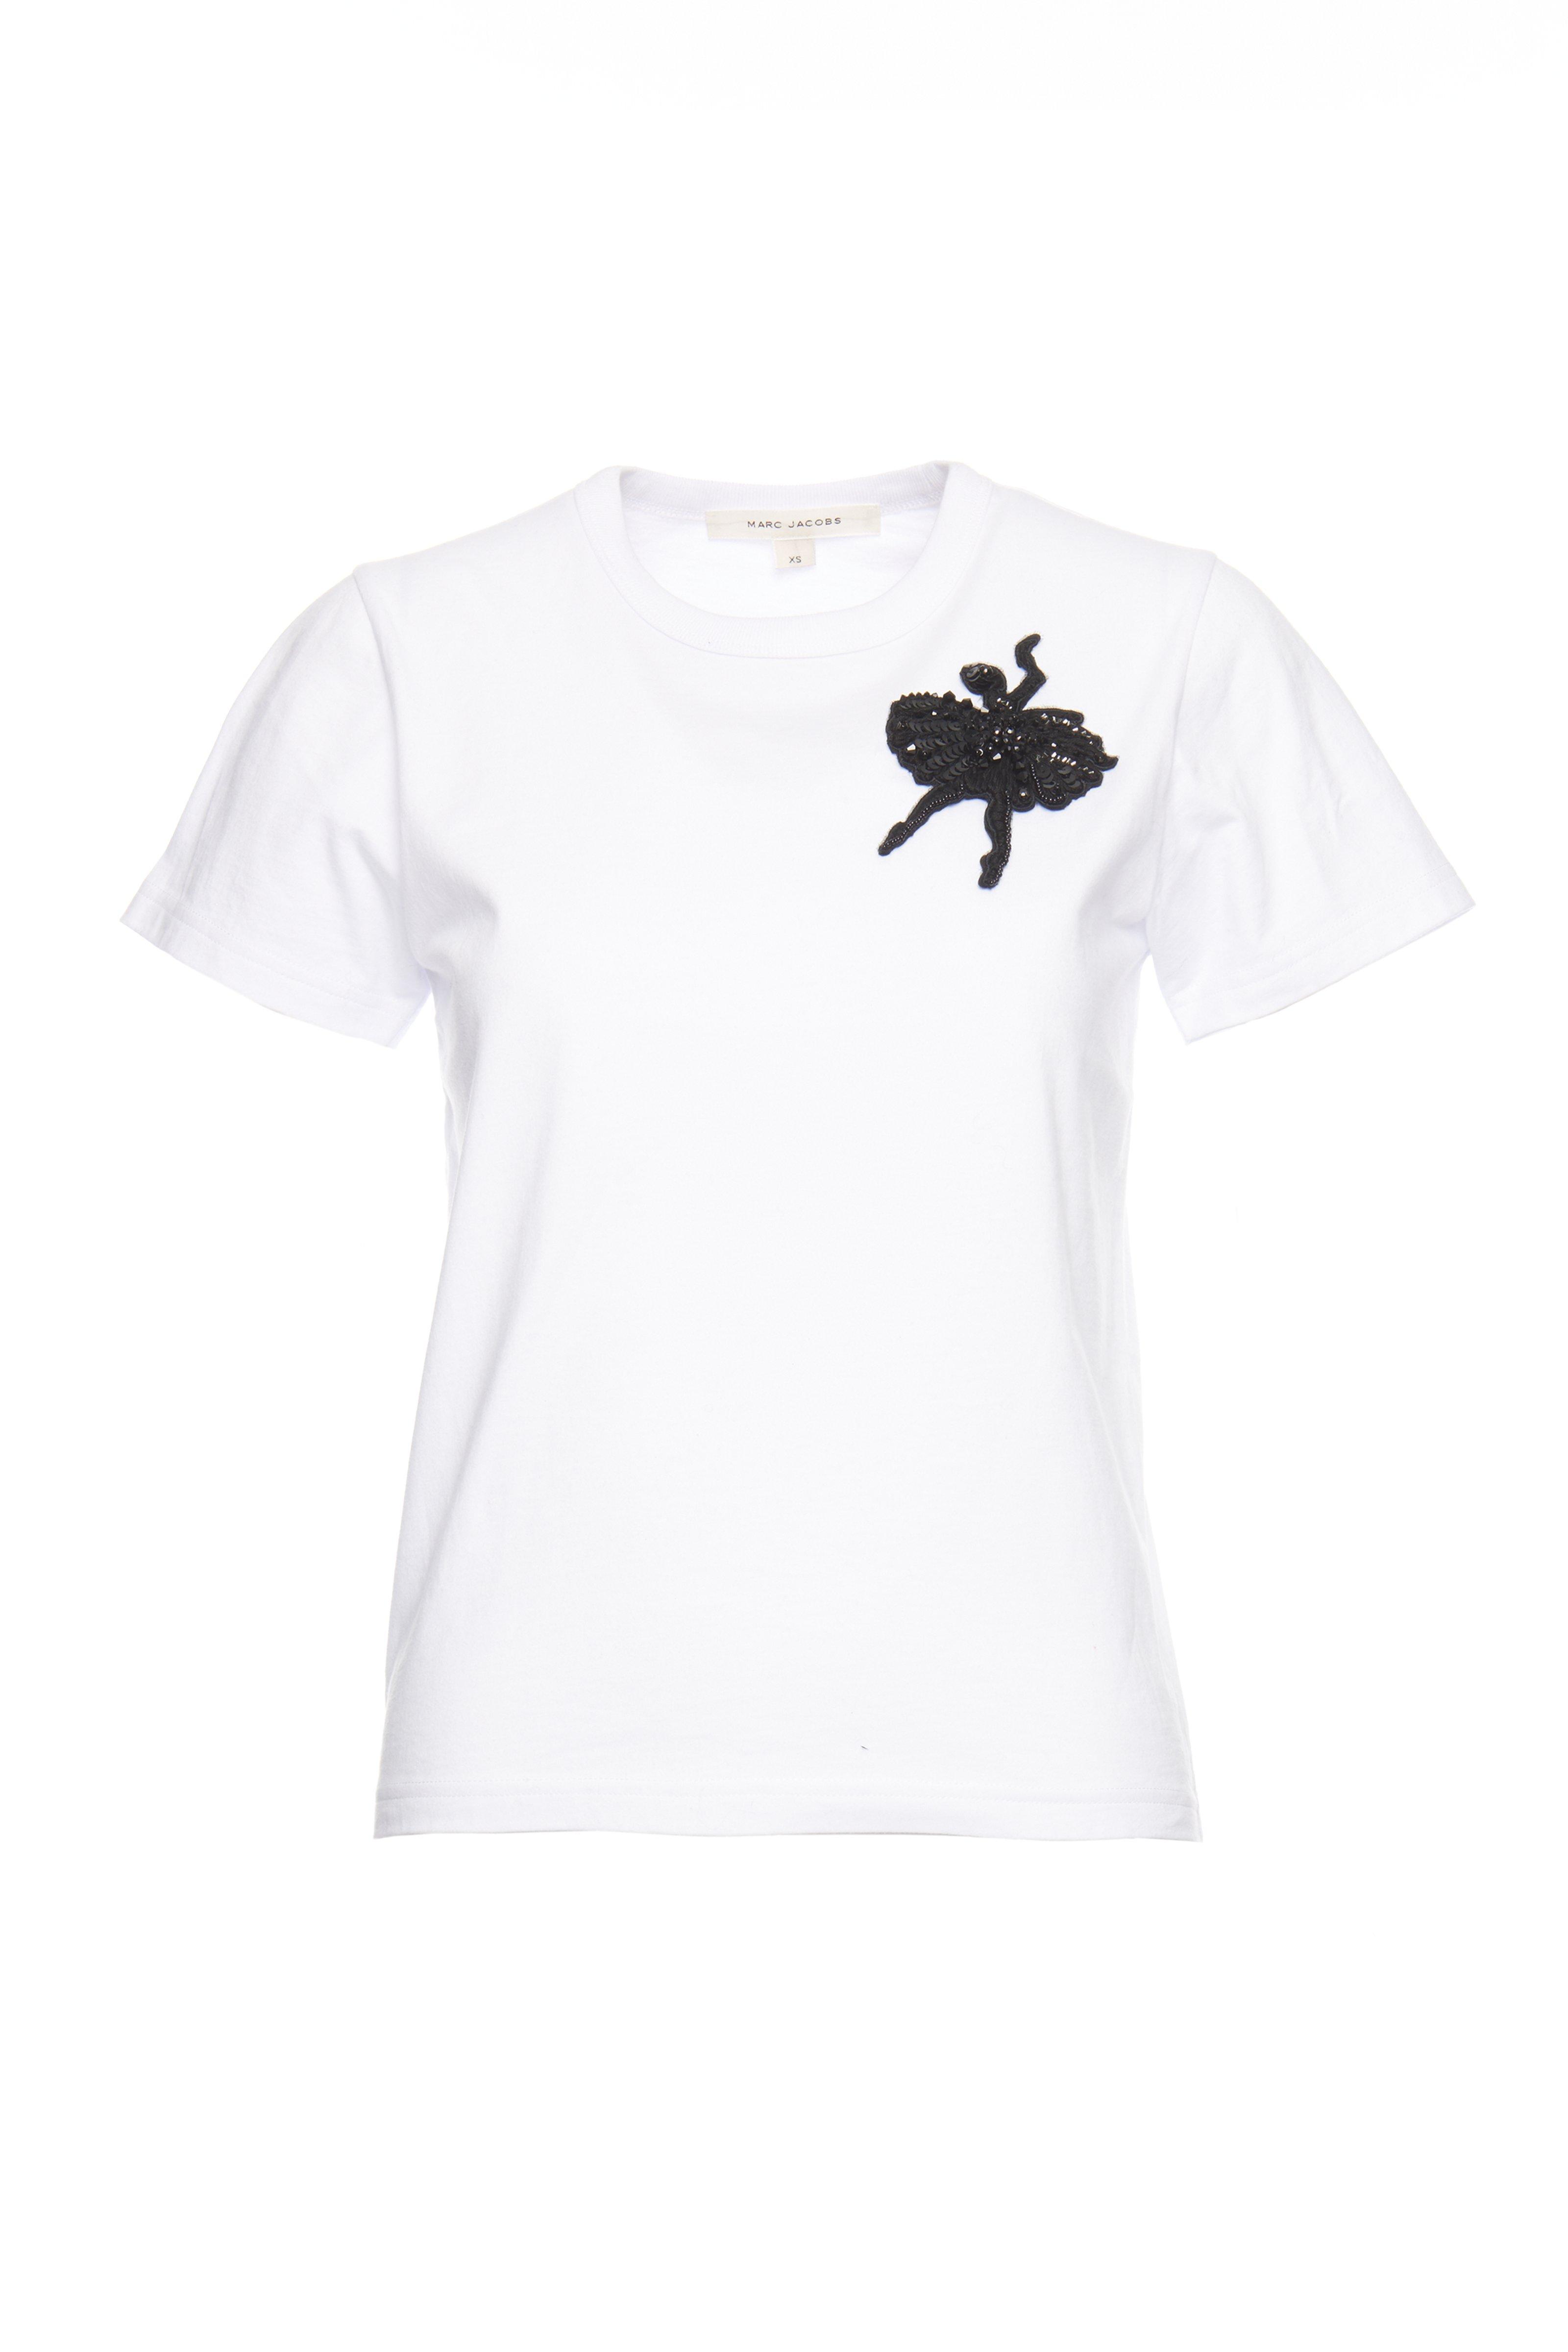 Marc Jacobs Classic Ballerina T-shirt In Ivory Multi | ModeSens